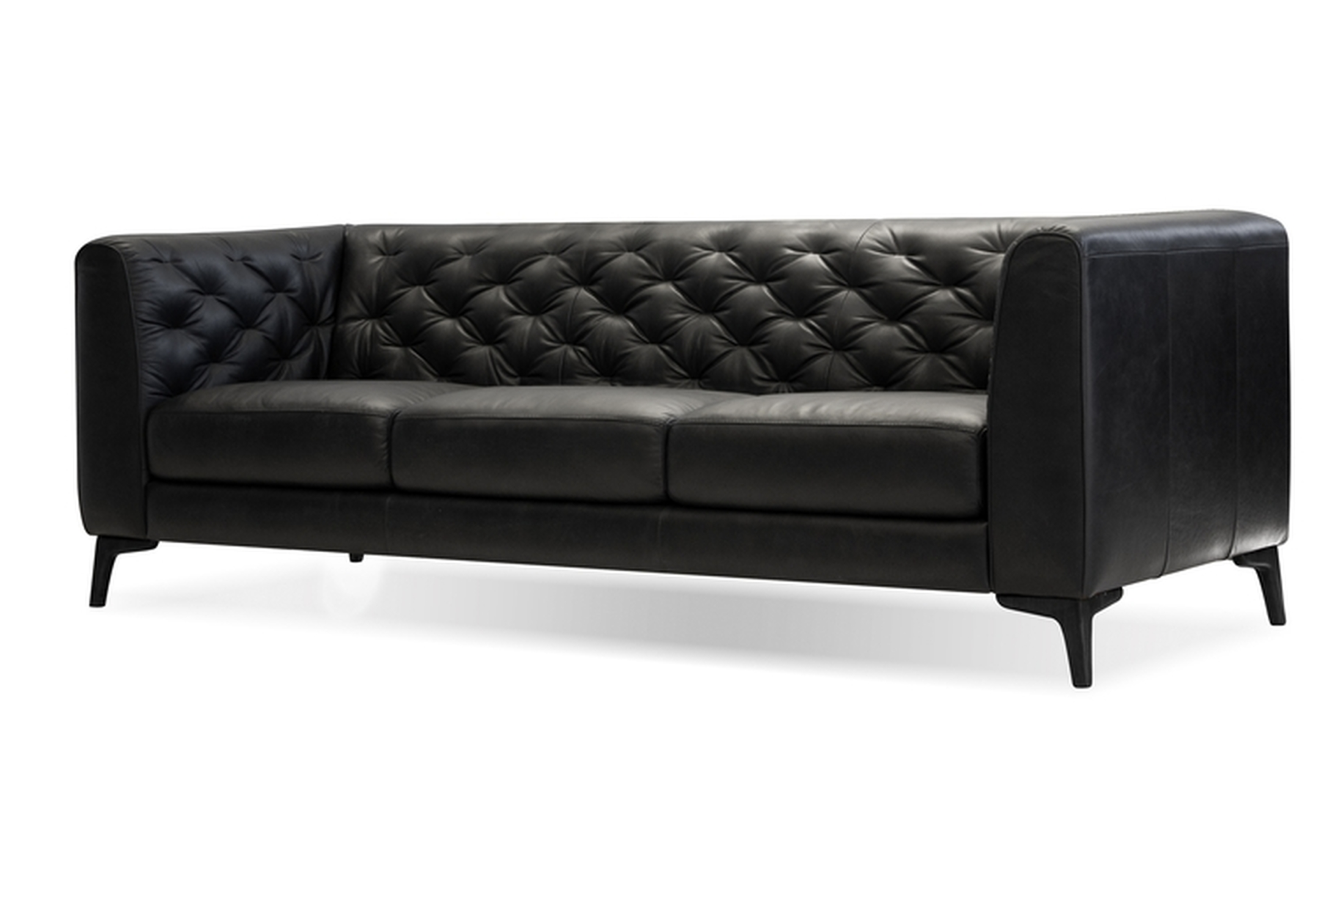 Black Leather Tufted Sofa Retrofit Home, Black Leather Tufted Sofa